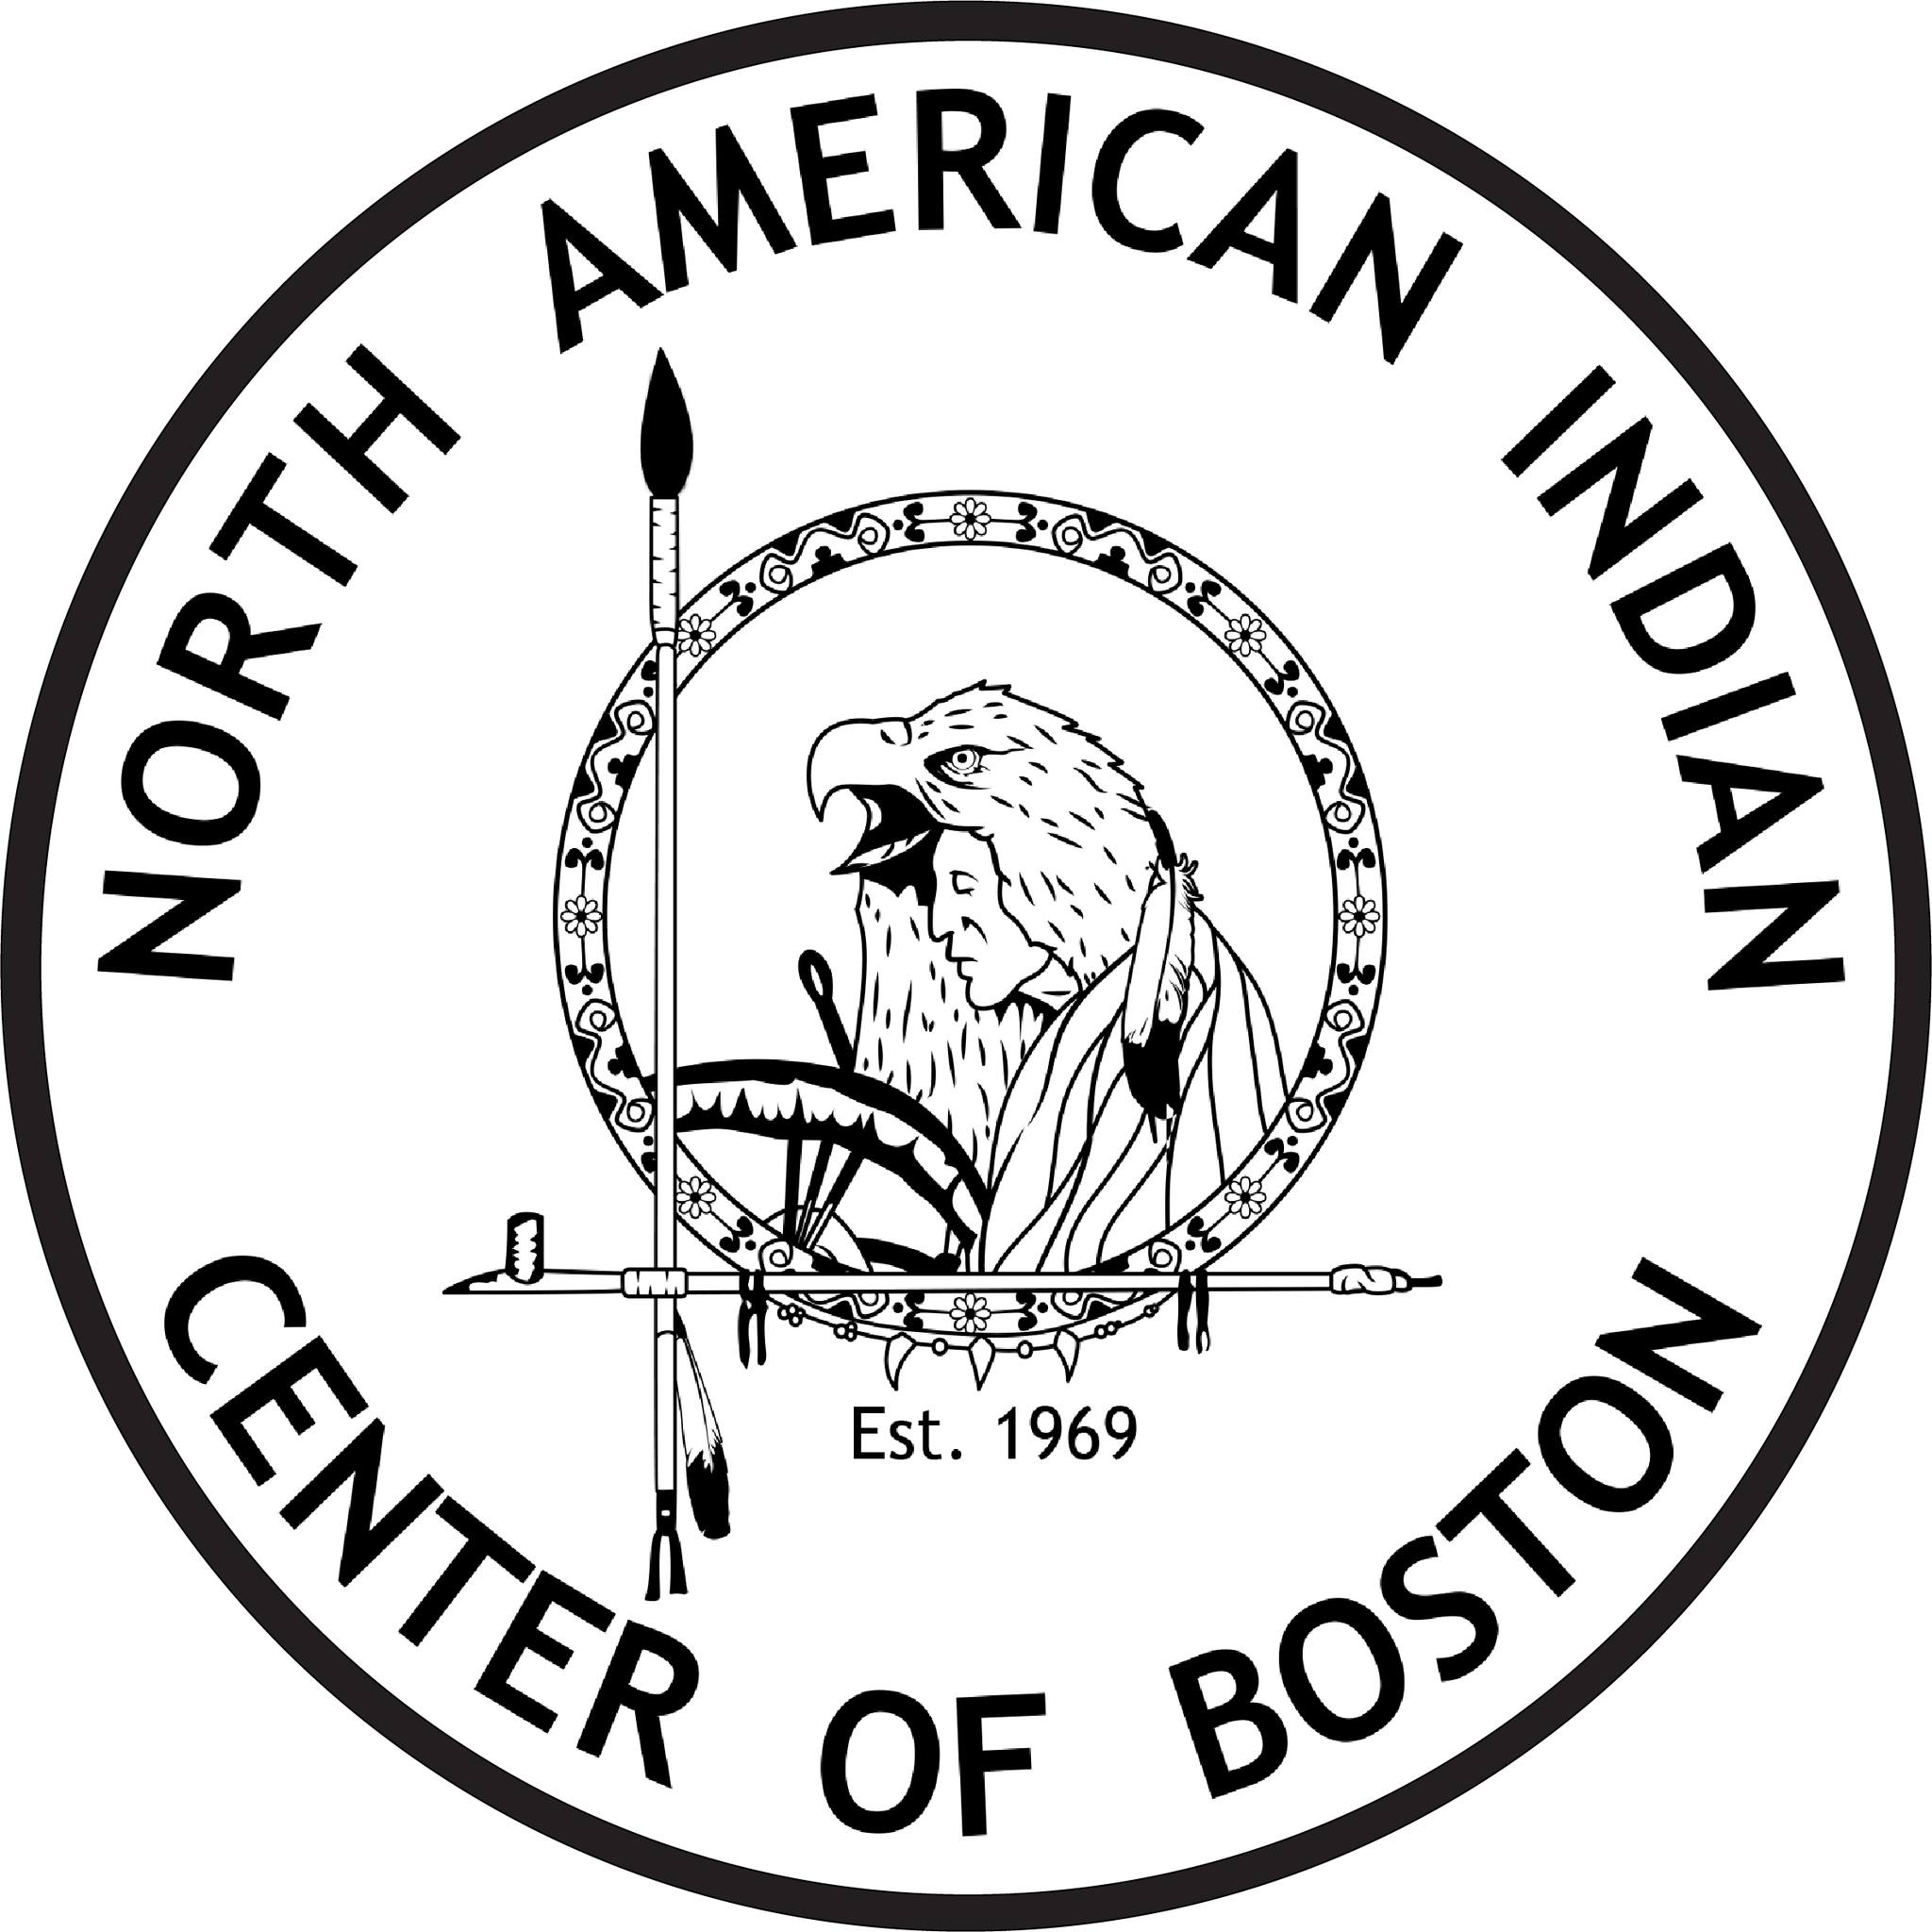 Native American Organization in Boston Massachusetts - North American Indian Center of Boston